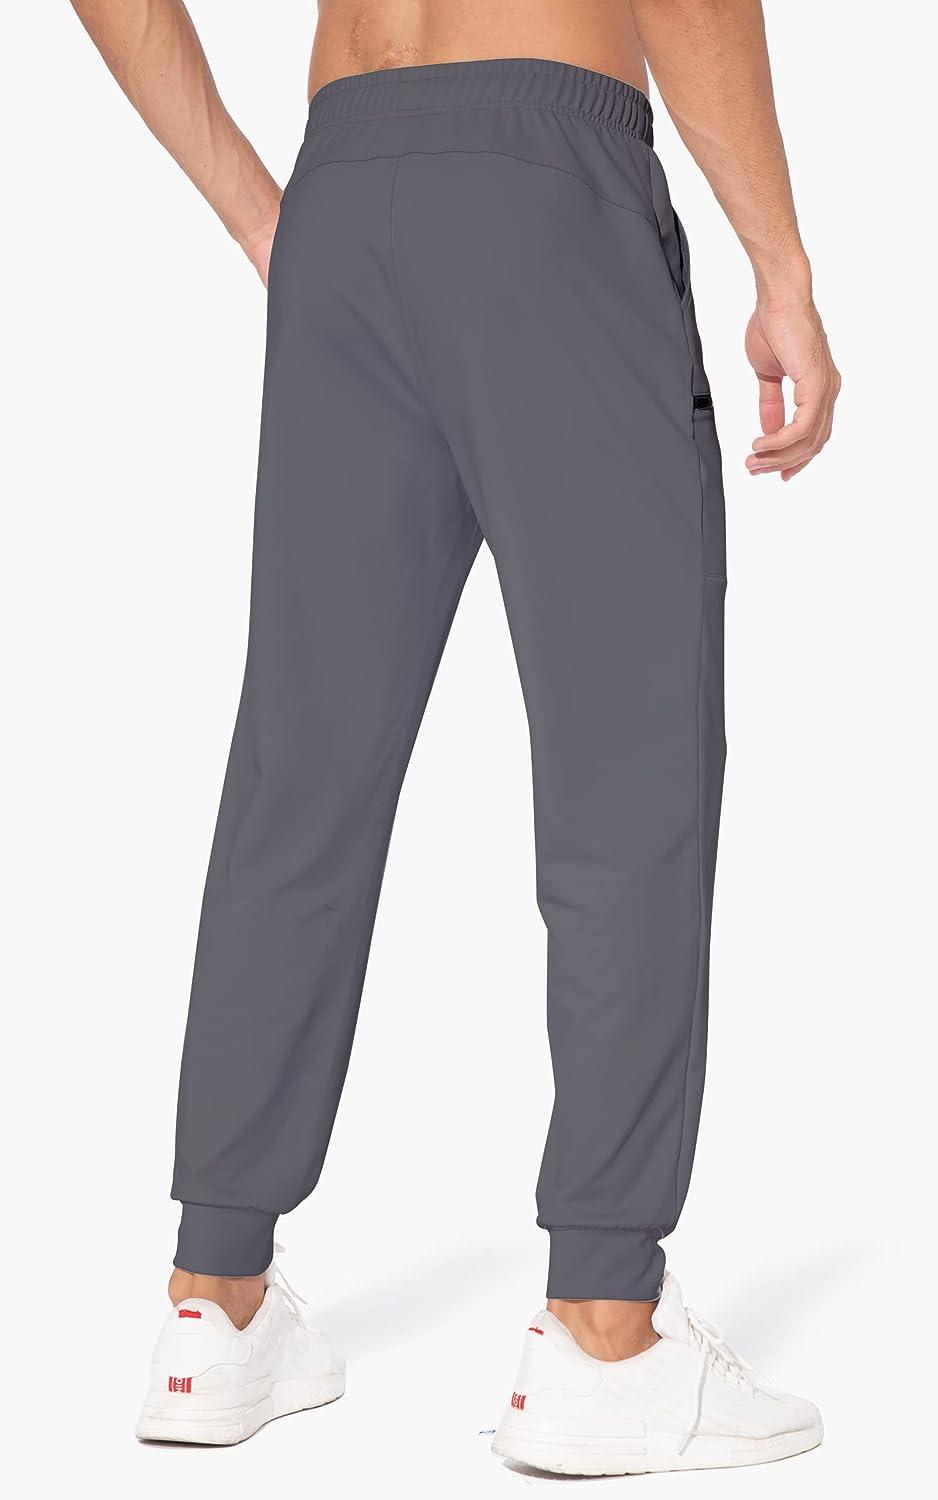 GetUSCart- Oalka Women's Joggers High Waist Yoga Pockets Sweatpants Sport  Workout Pants Light Grey M